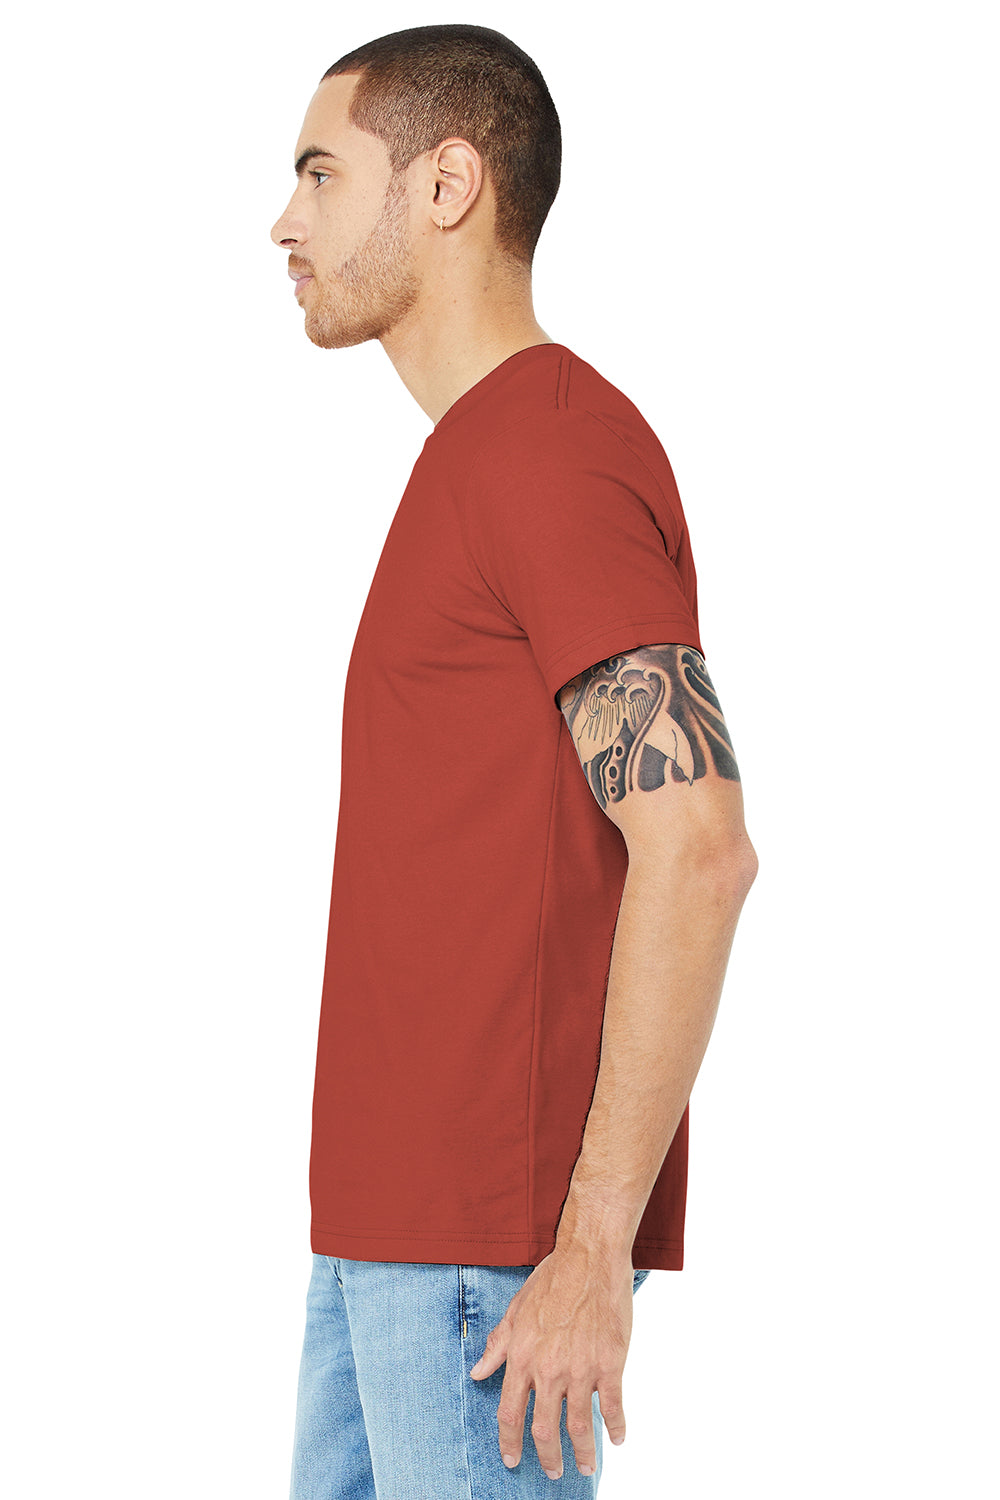 Bella + Canvas BC3001/3001C Mens Jersey Short Sleeve Crewneck T-Shirt Rust Red Model Side